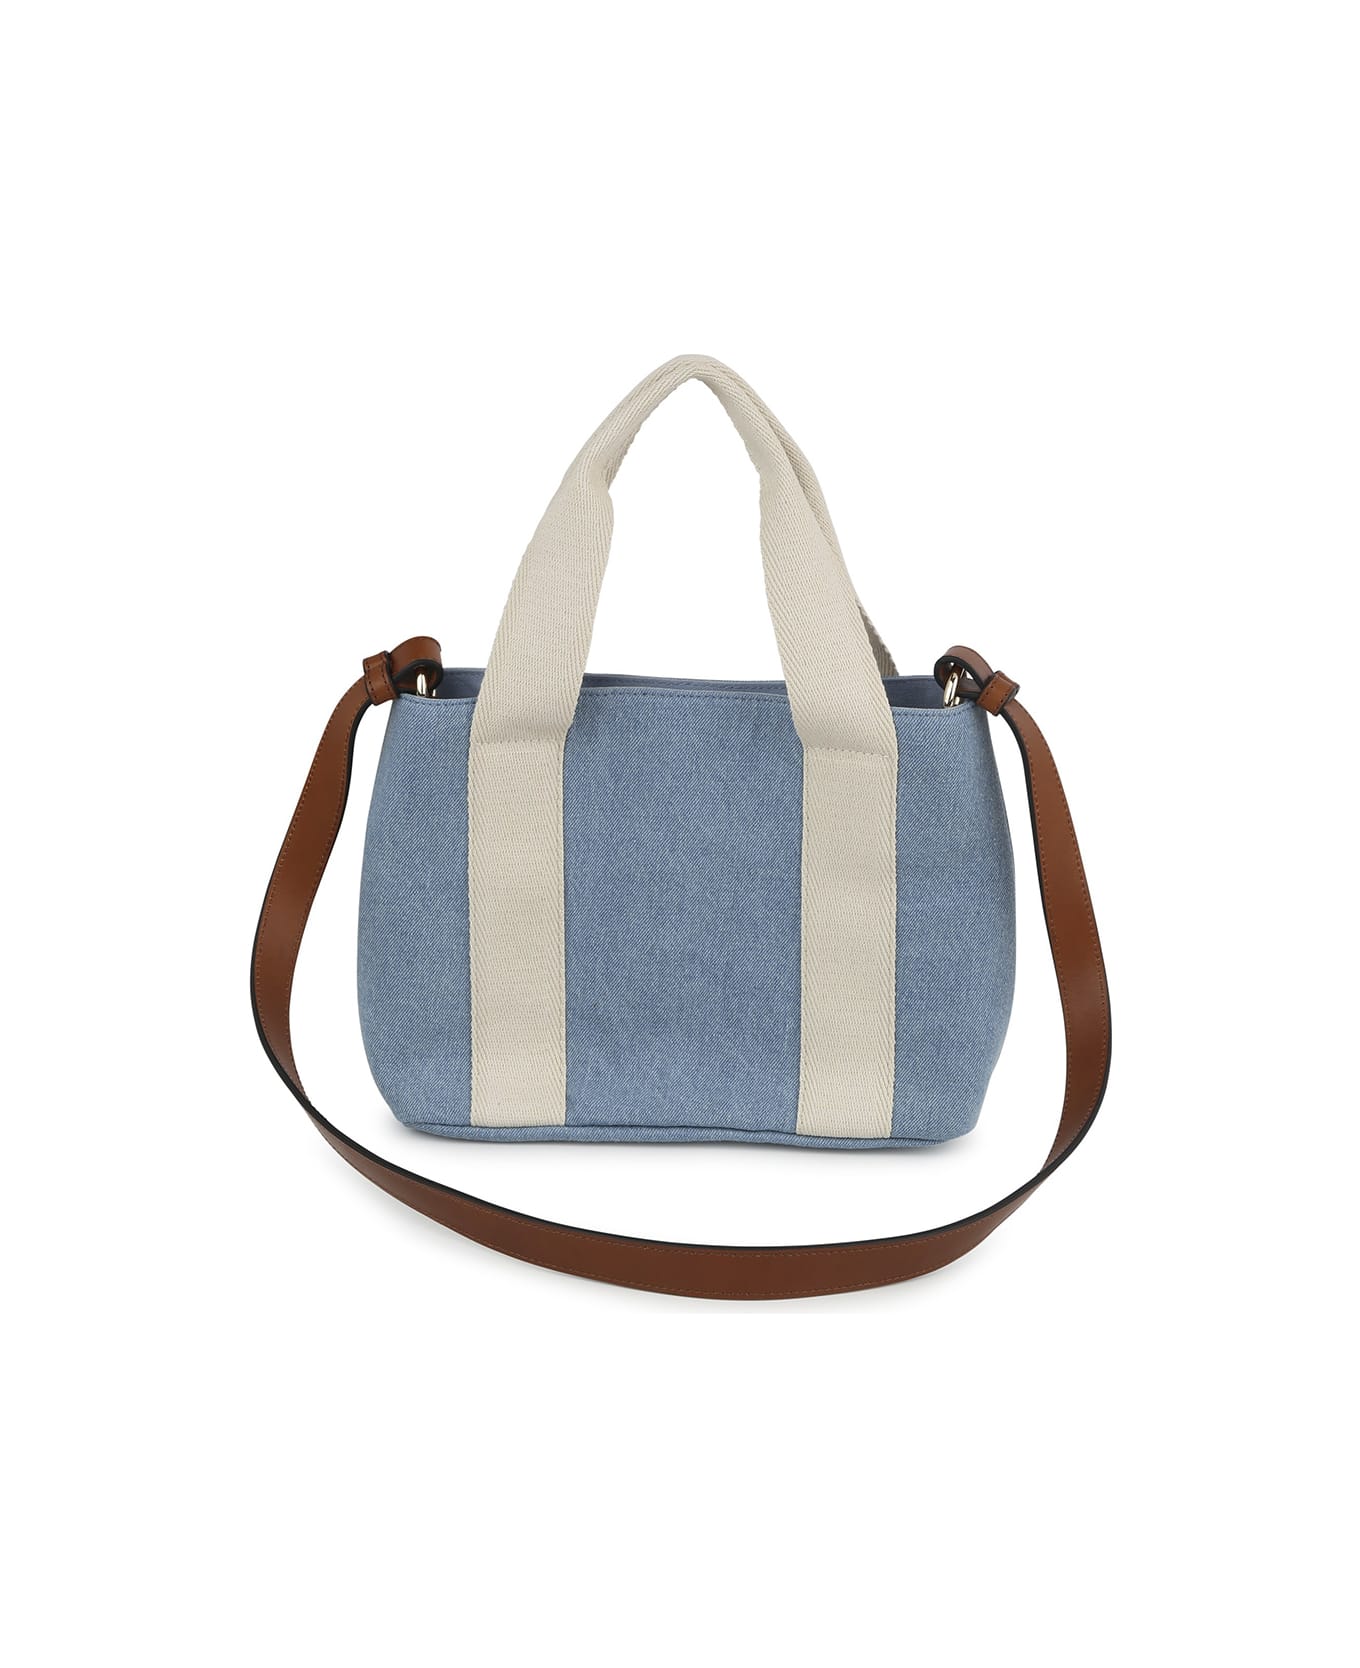 Chloé Denim Blue Nursery Bag With Logo - Blue